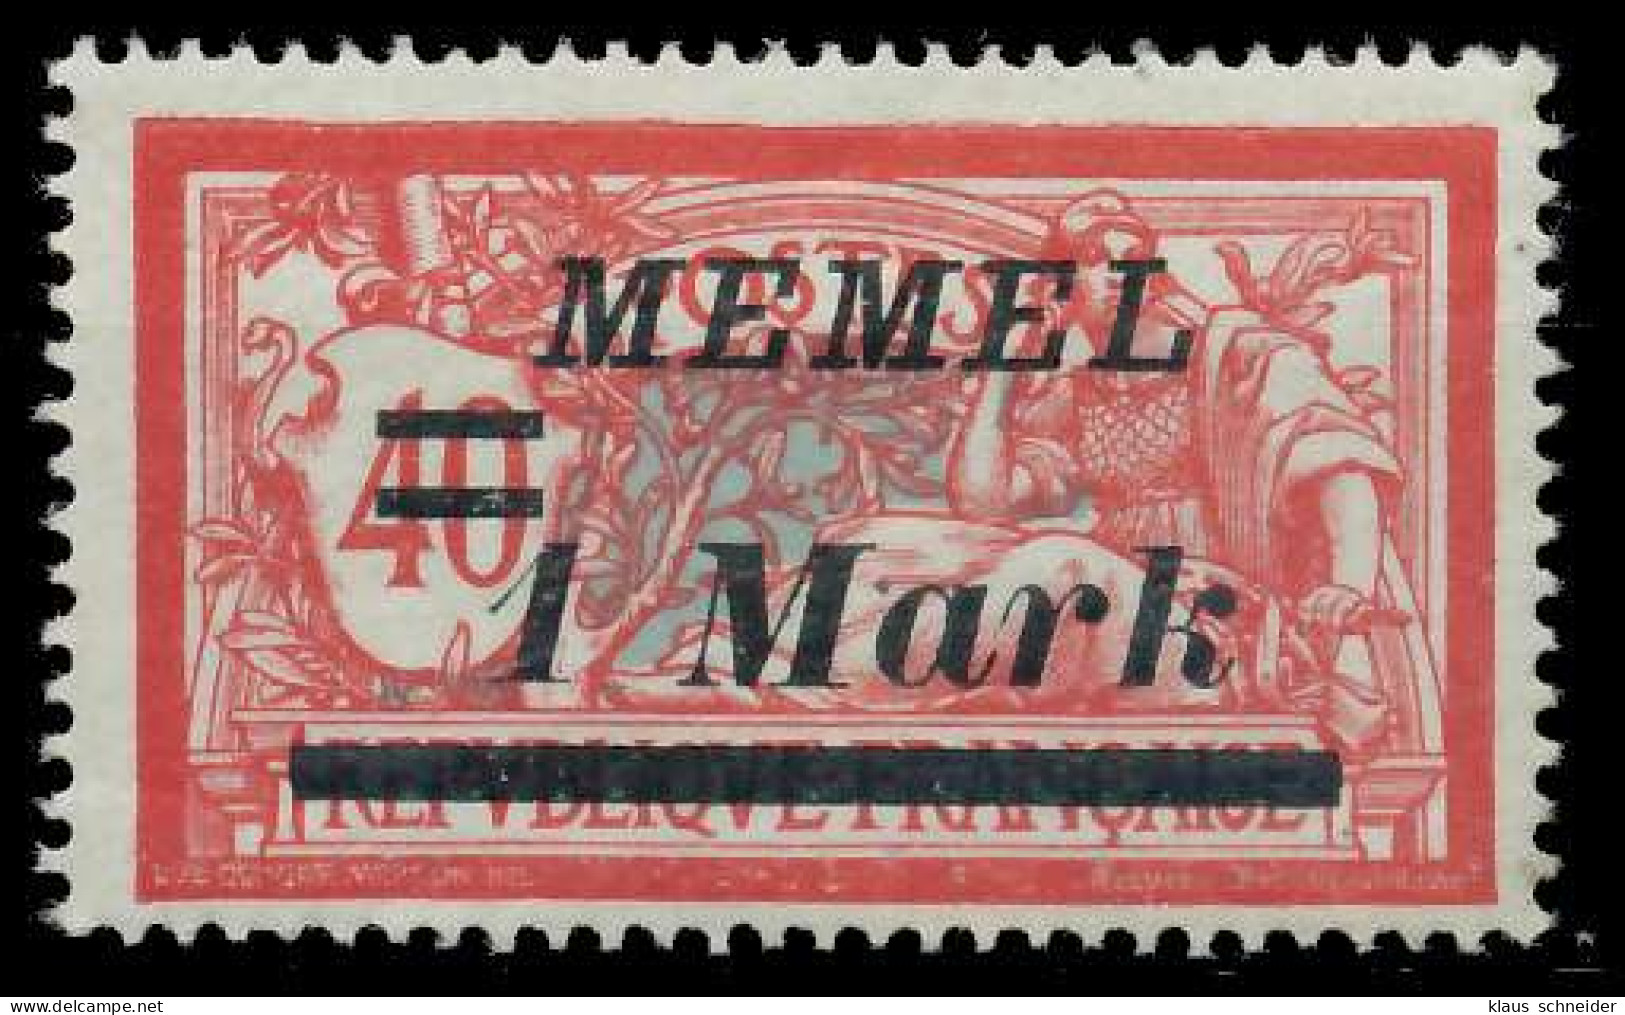 MEMEL 1921 Nr 36a Ungebraucht X447A0A - Memel (Klaipeda) 1923